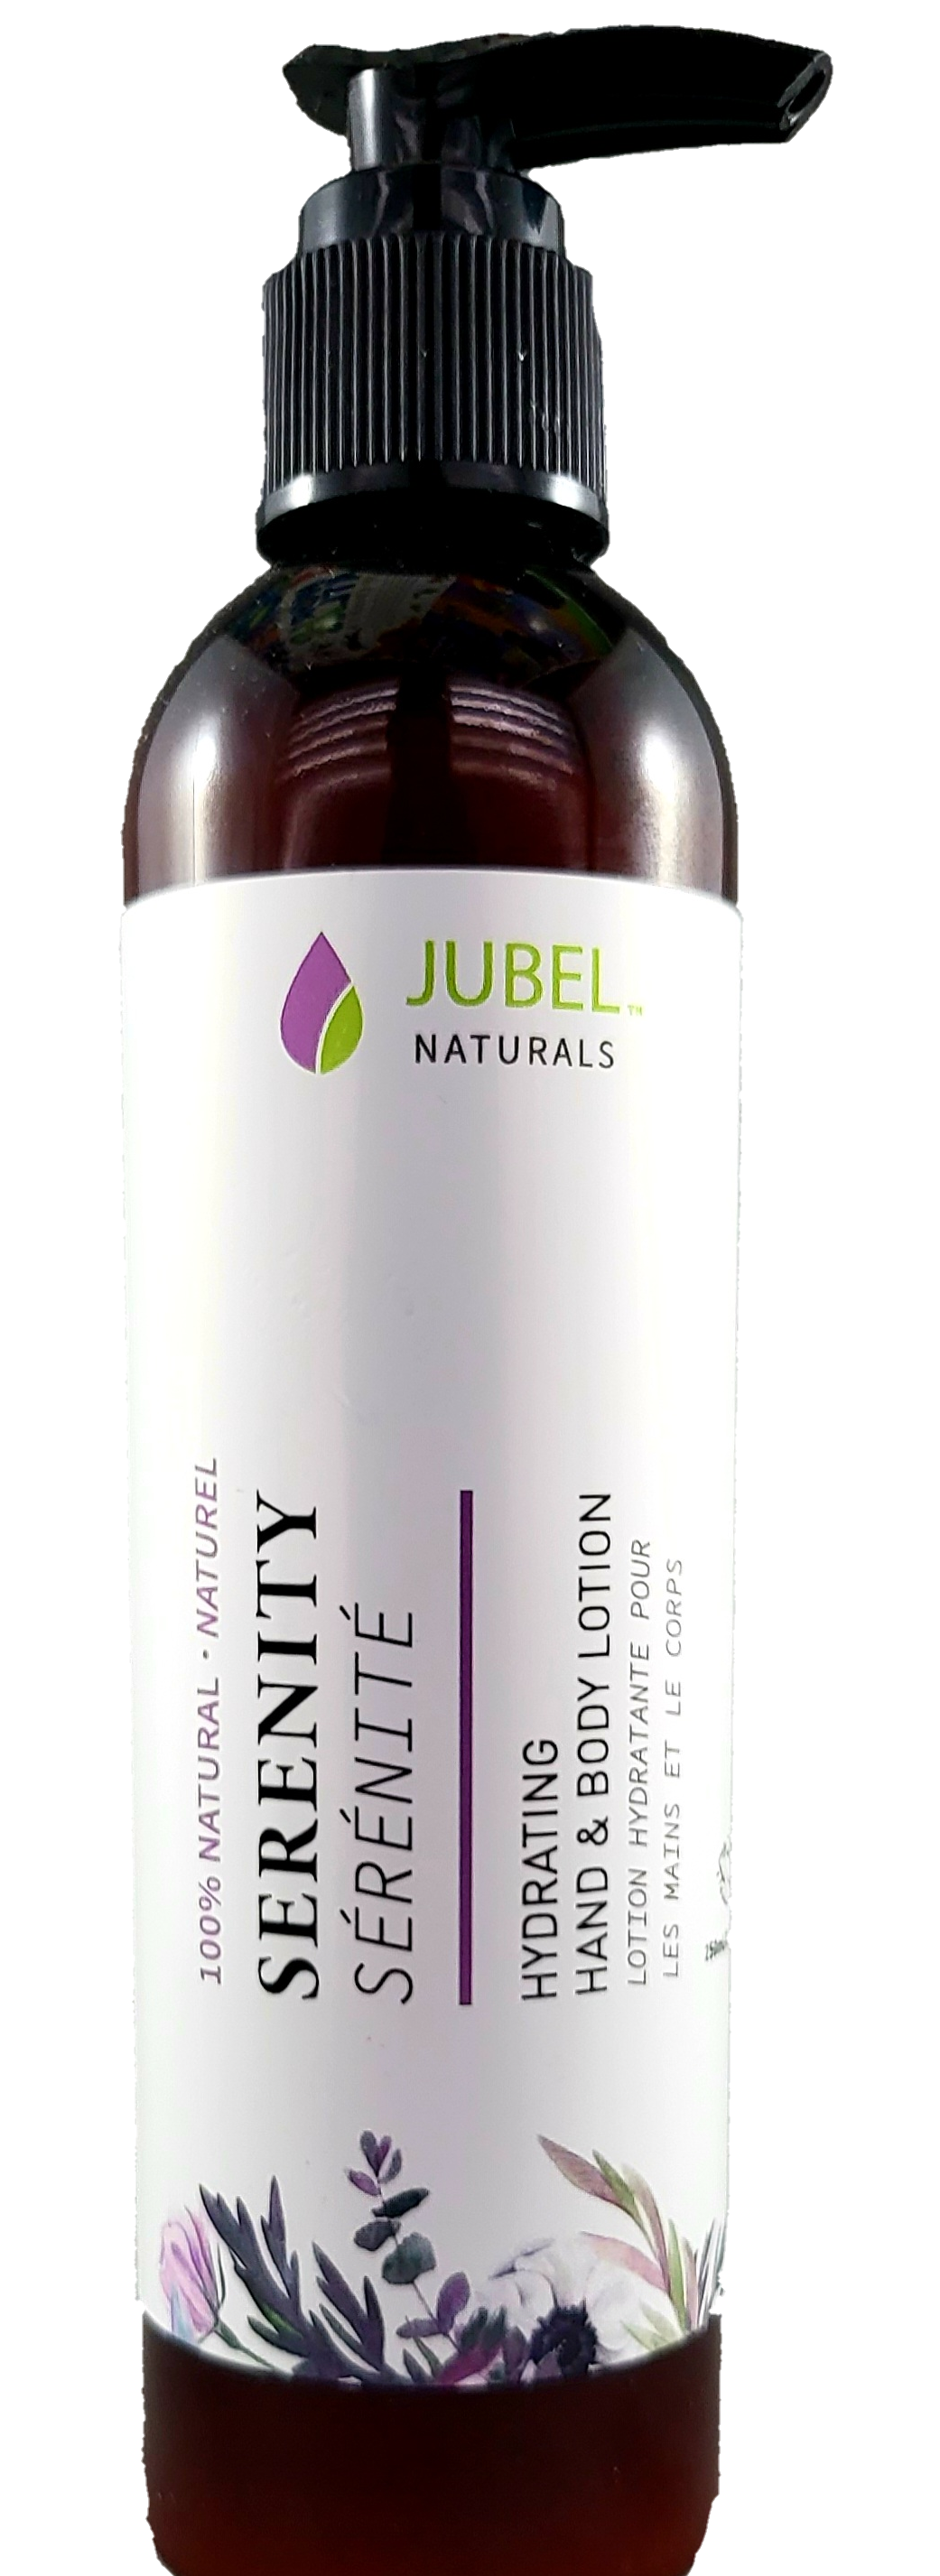 Jubel Naturals Serenity Hydrating Hand & Body Lotion - NorthernVitality.us